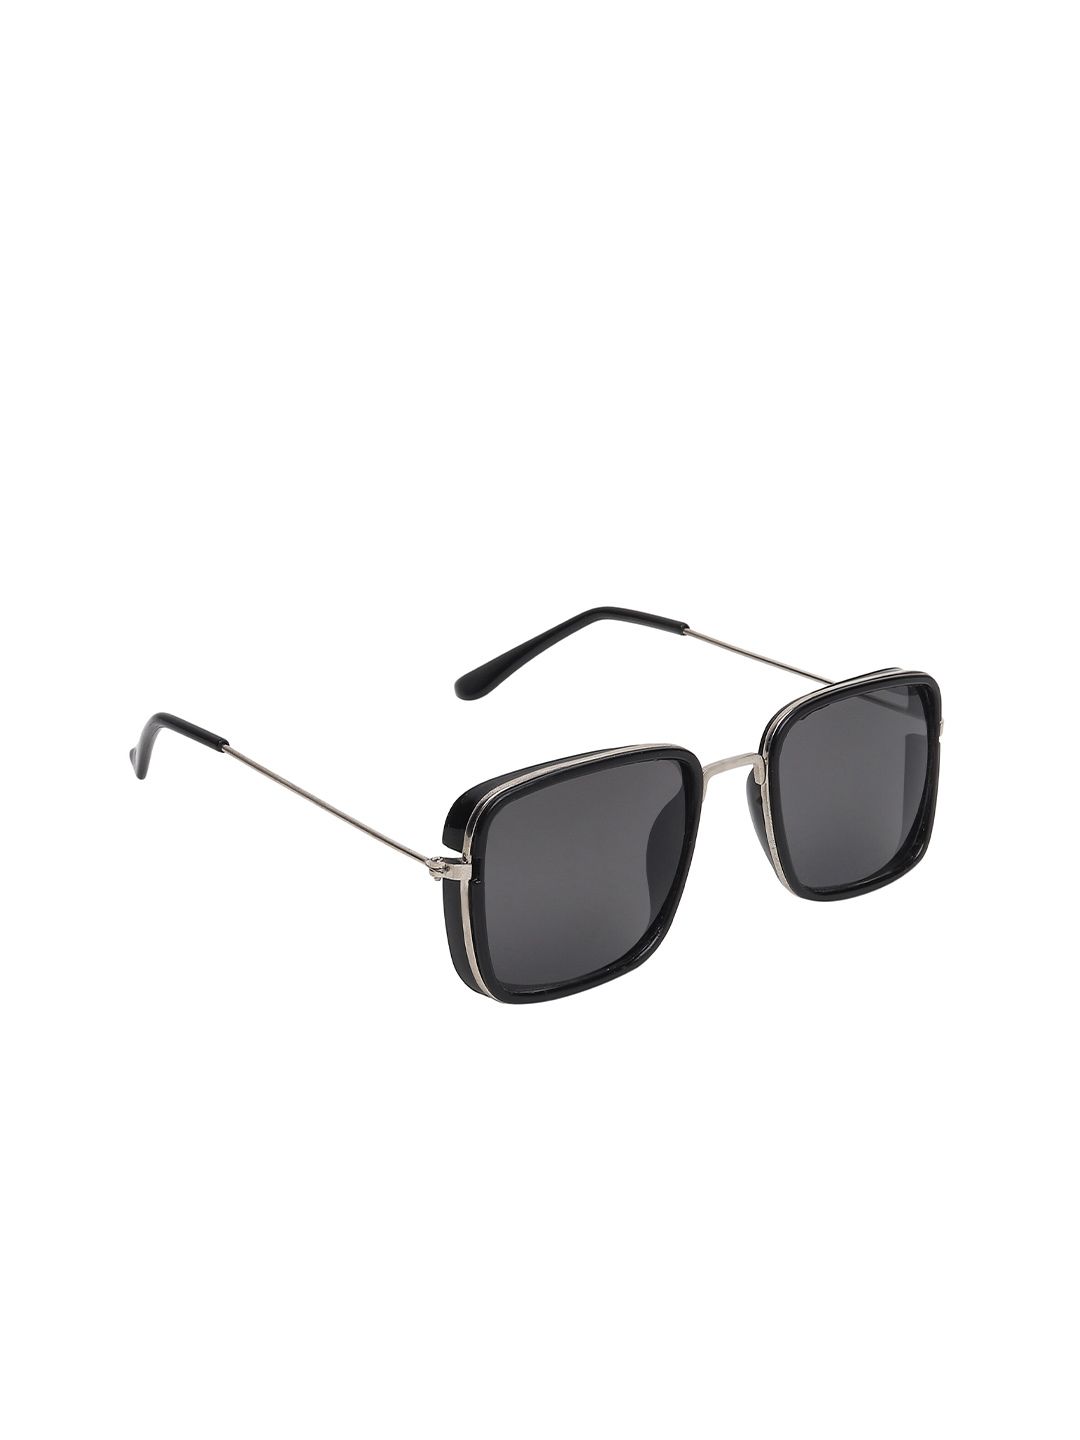 CRIBA Full Rim Square Sunglasses with UV Protected Lens VCR_KS_PC_G-NBLK